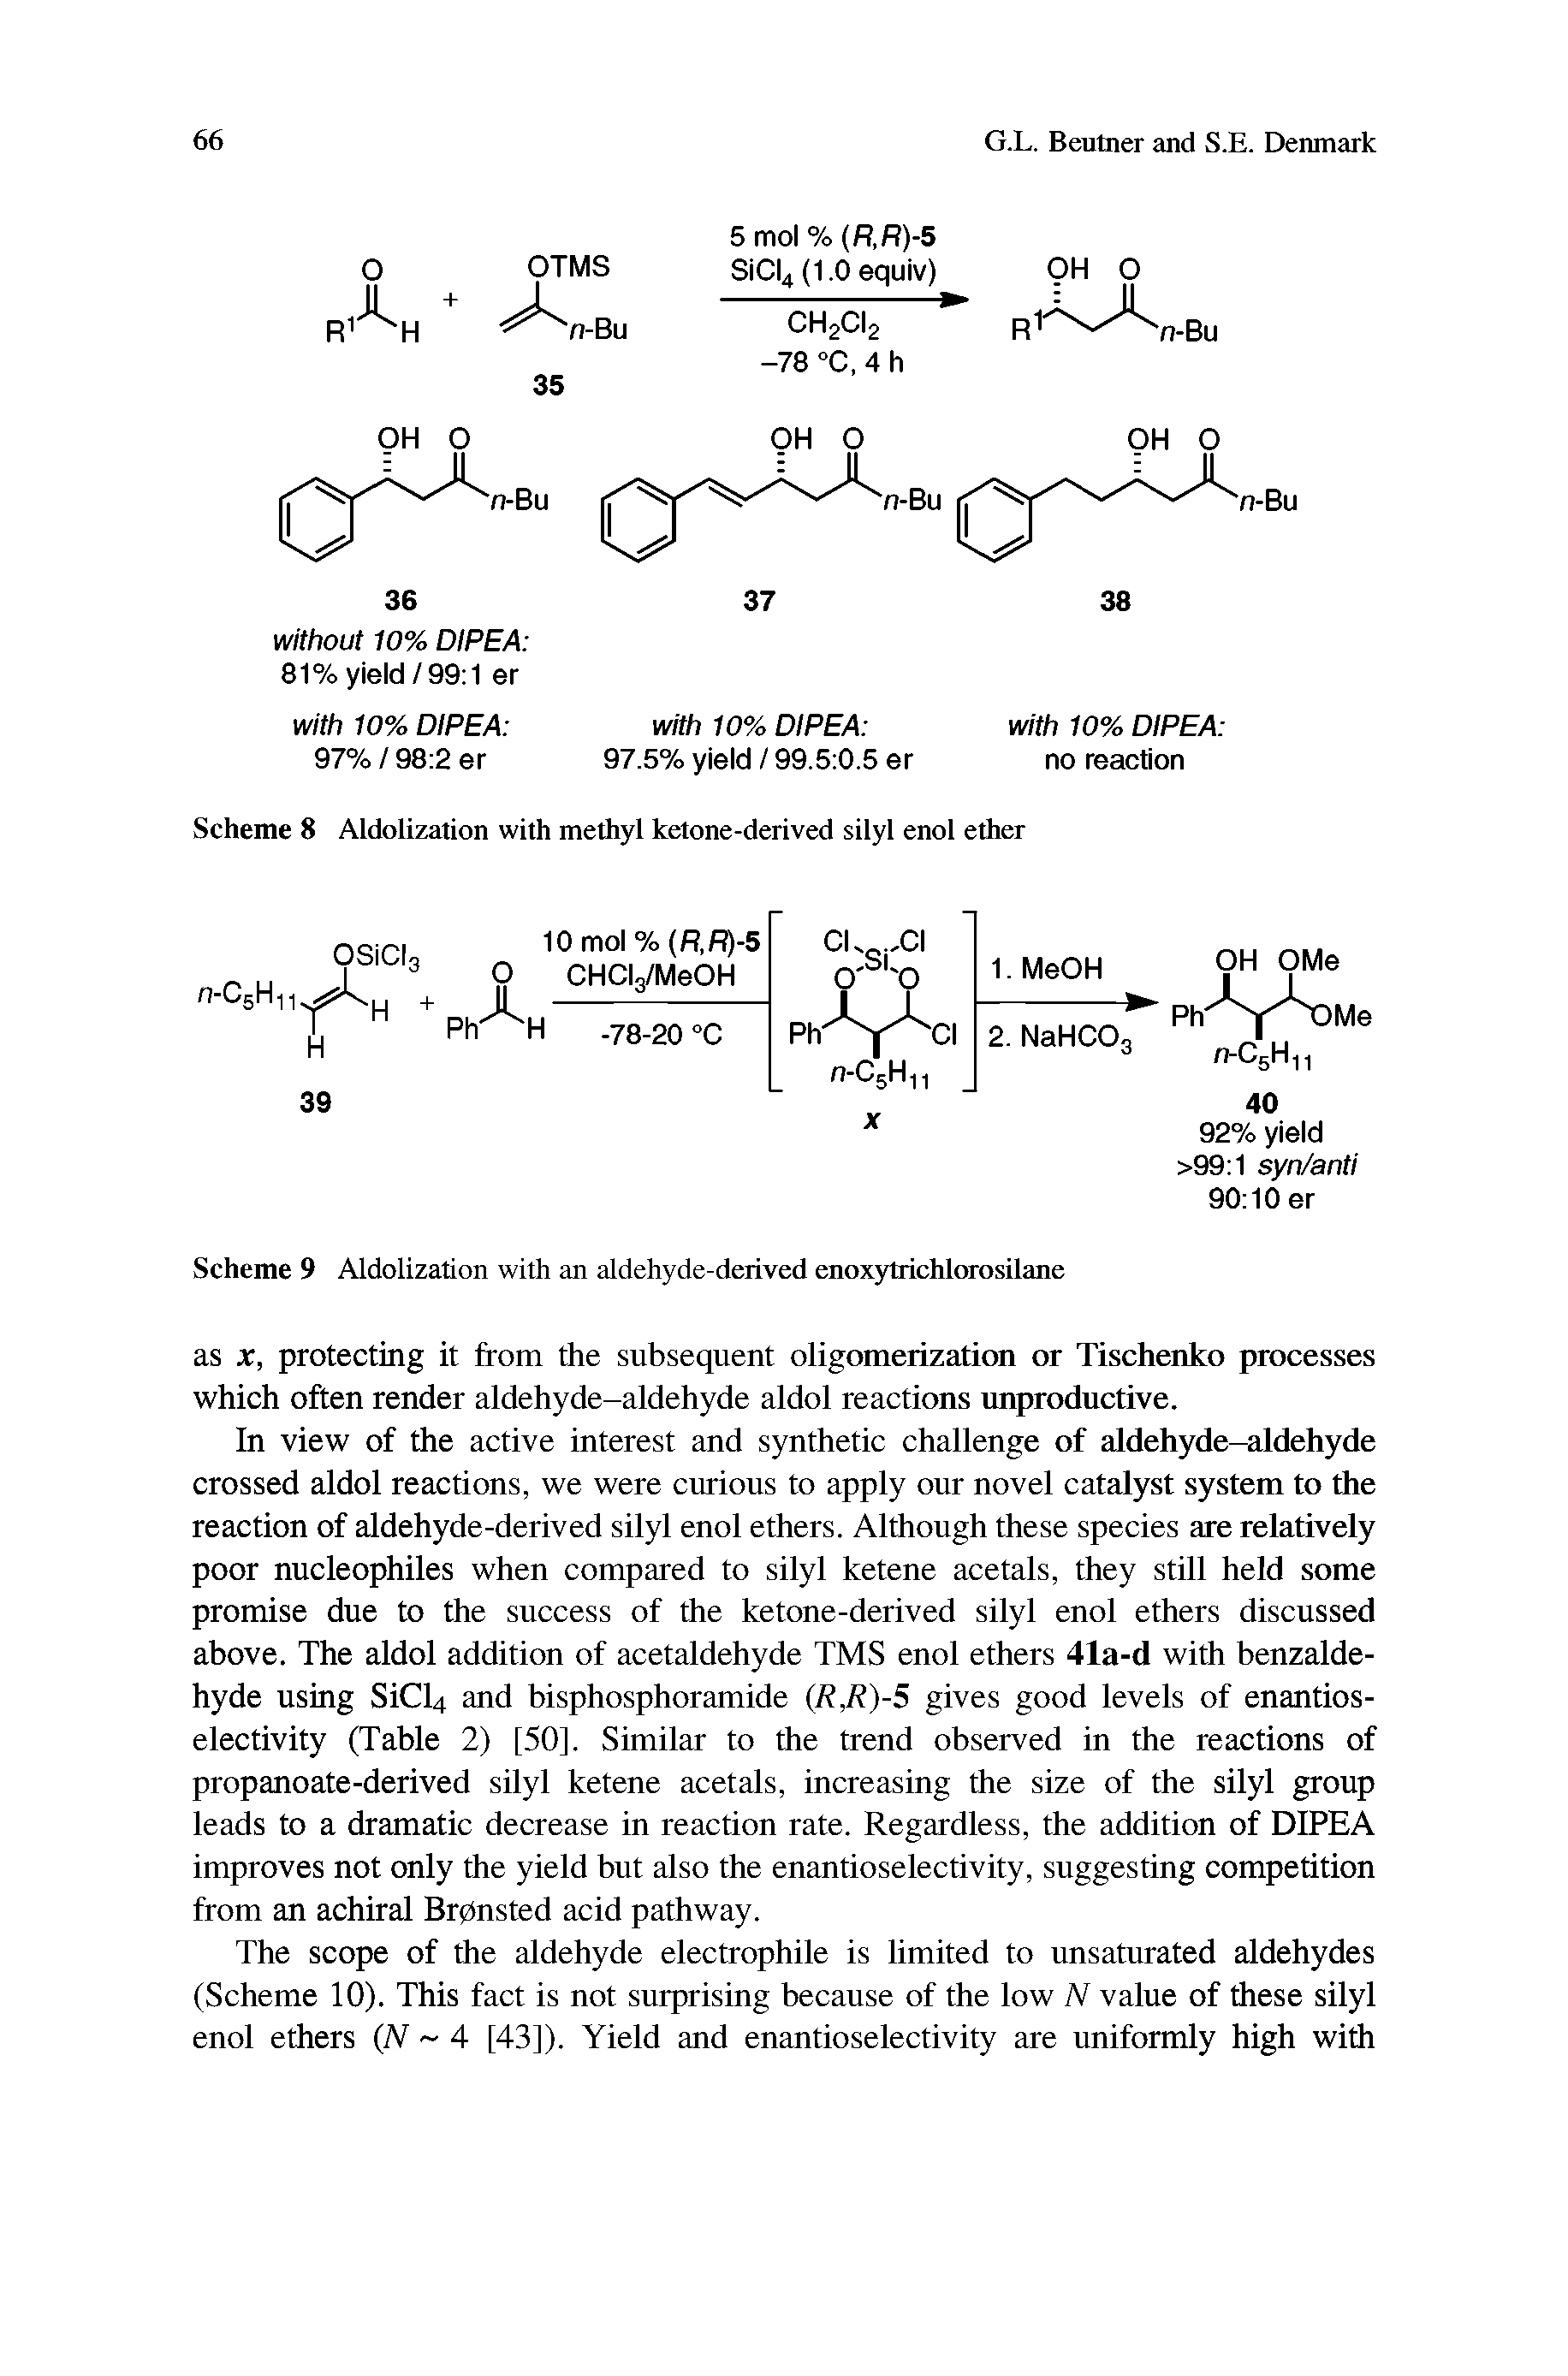 Scheme 8 Aldolization with methyl ketone-derived silyl enol ether...